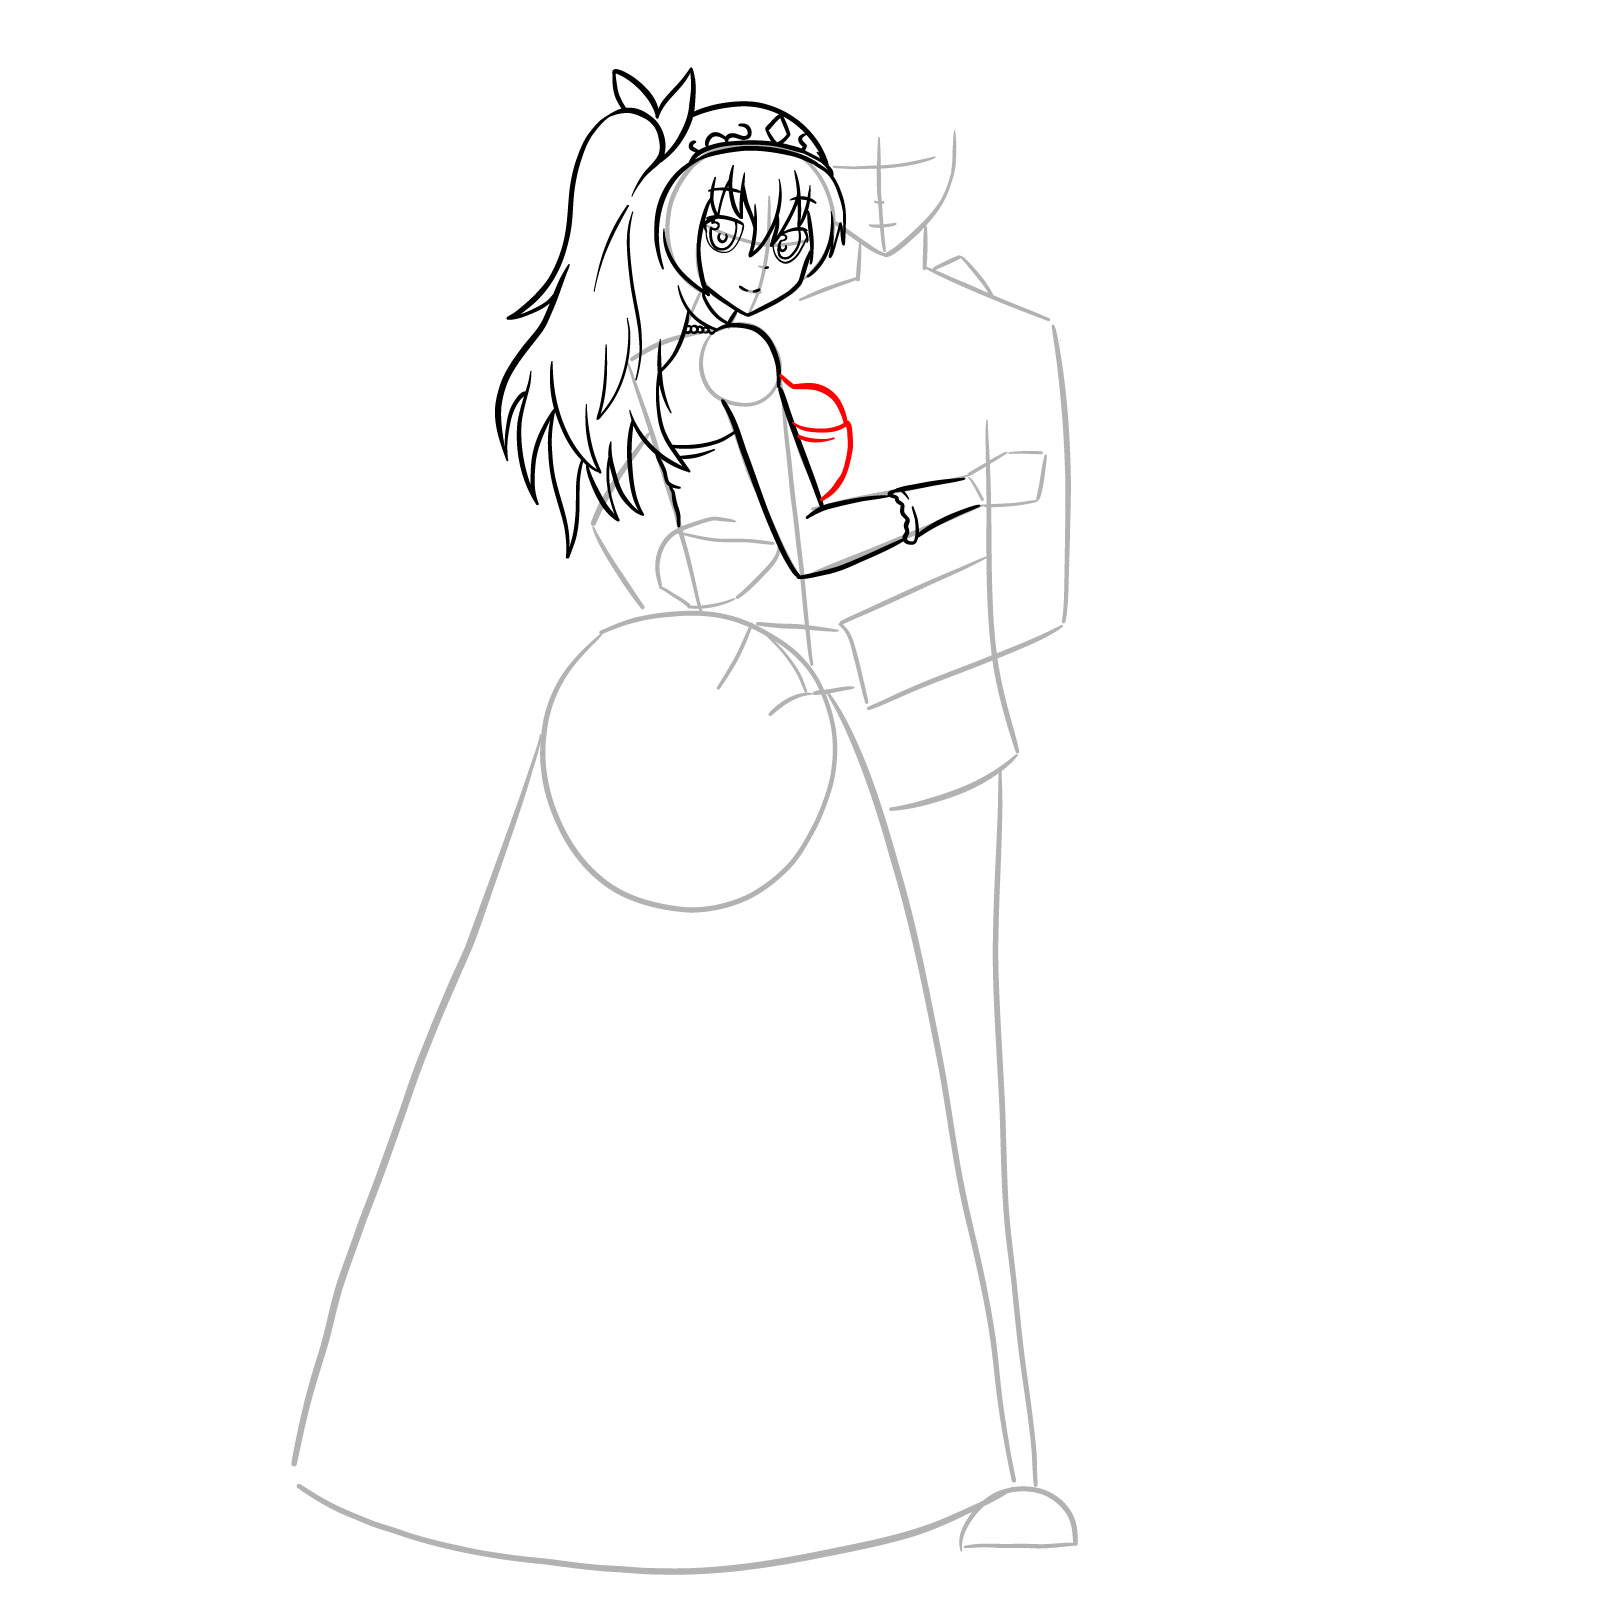 How to draw Ikki and Stella's wedding - step 19